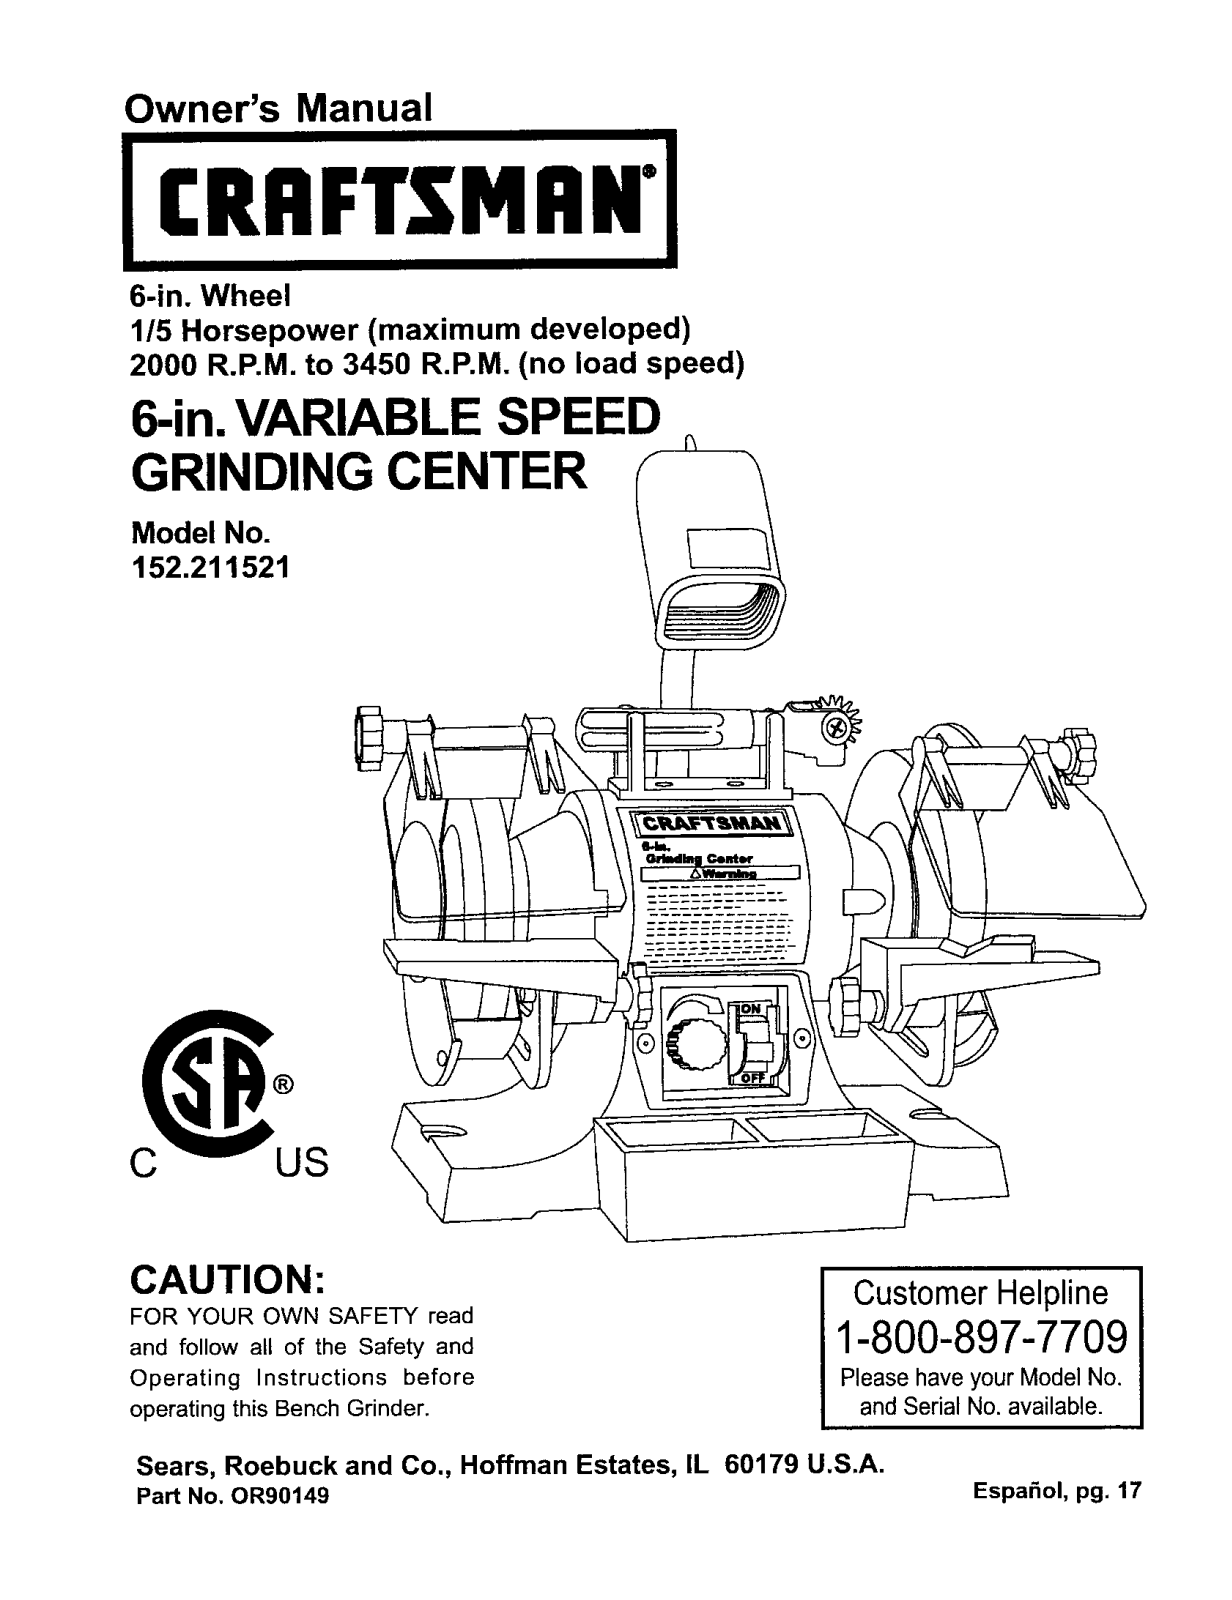 Craftsman 152211520, 152211521 Owner’s Manual